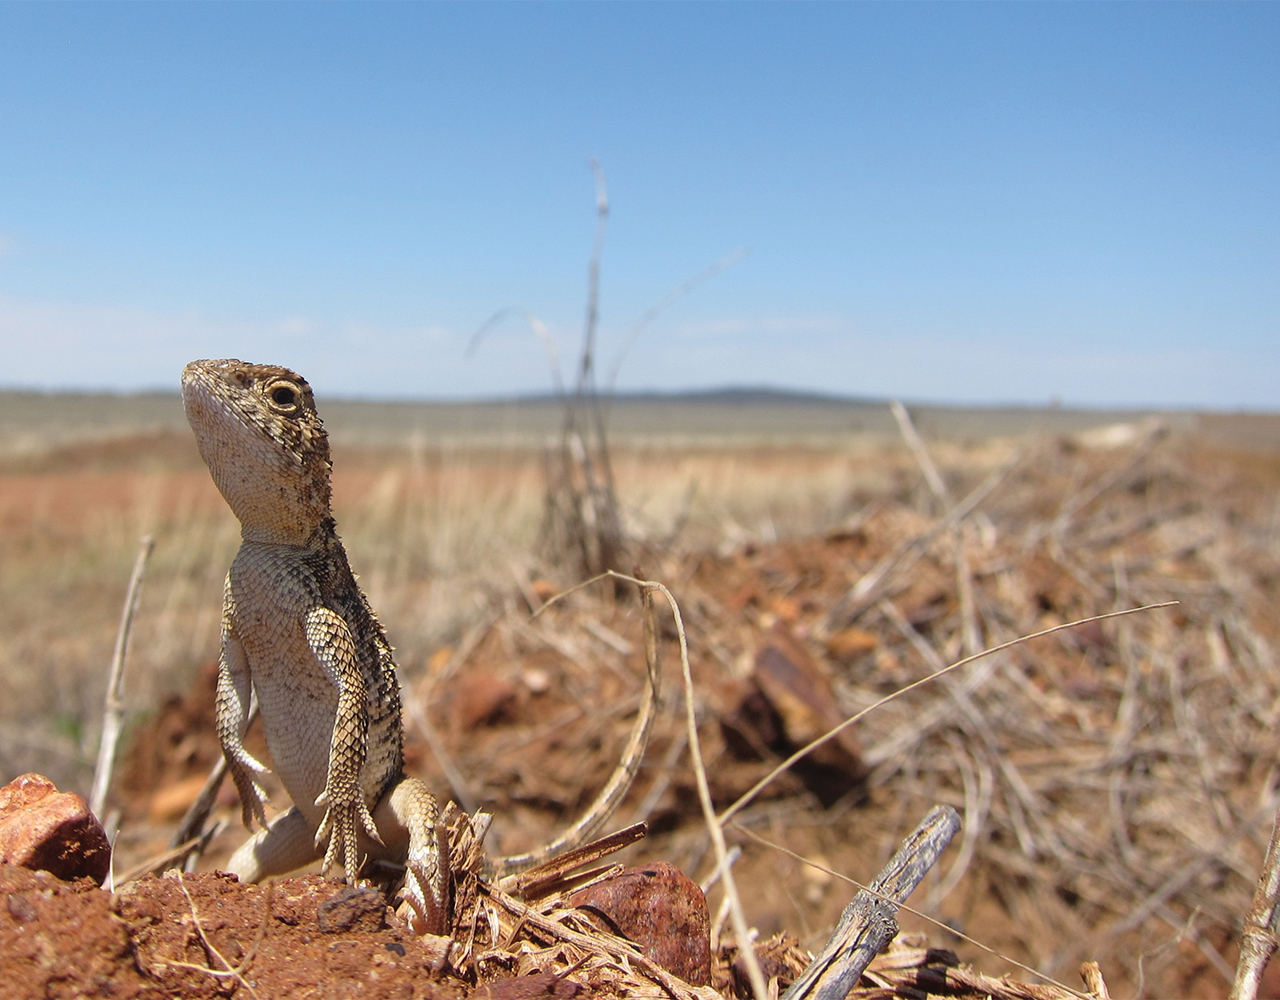 australian reptiles